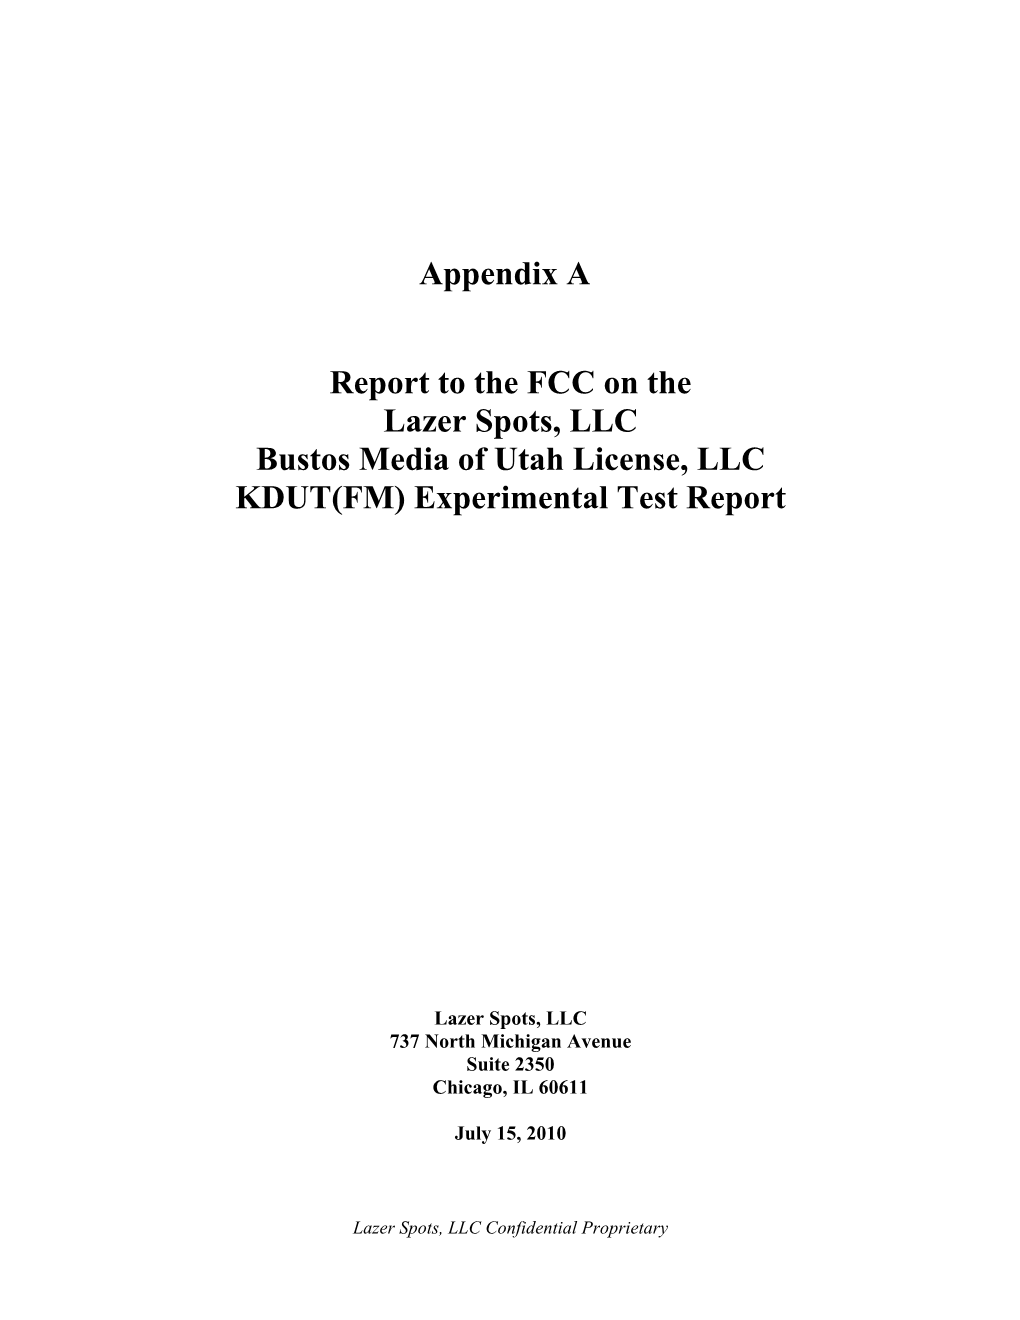 Report to the FCC on the Lazer Spots, LLC Bustos Media of Utah License, LLC KDUT(FM) Experimental Test Report